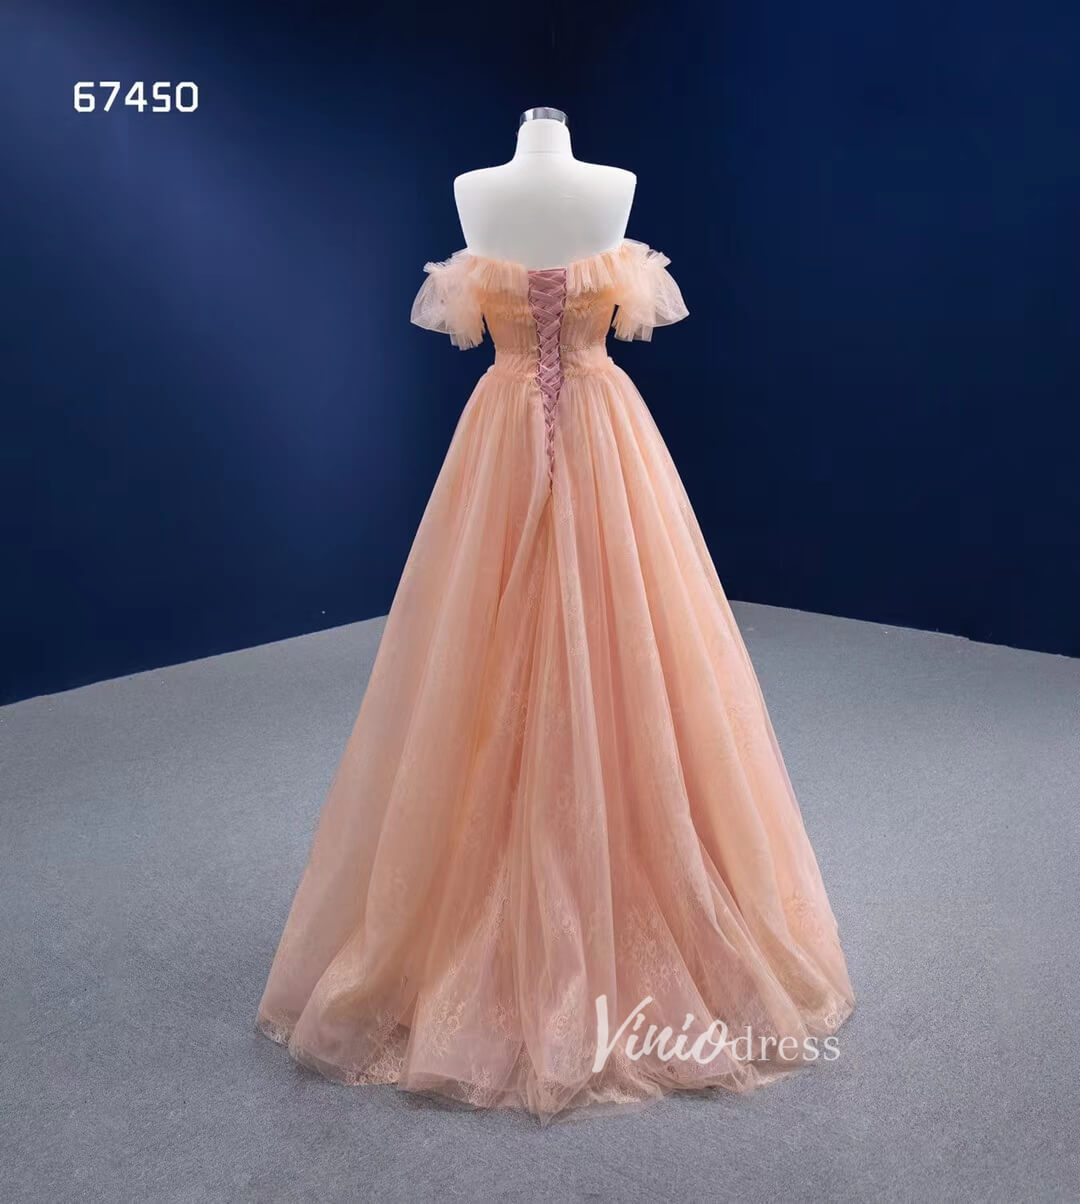 A-line Peach Tulle Prom Dresses Off the Shoulder Long Formal Dress 67450-prom dresses-Viniodress-Viniodress